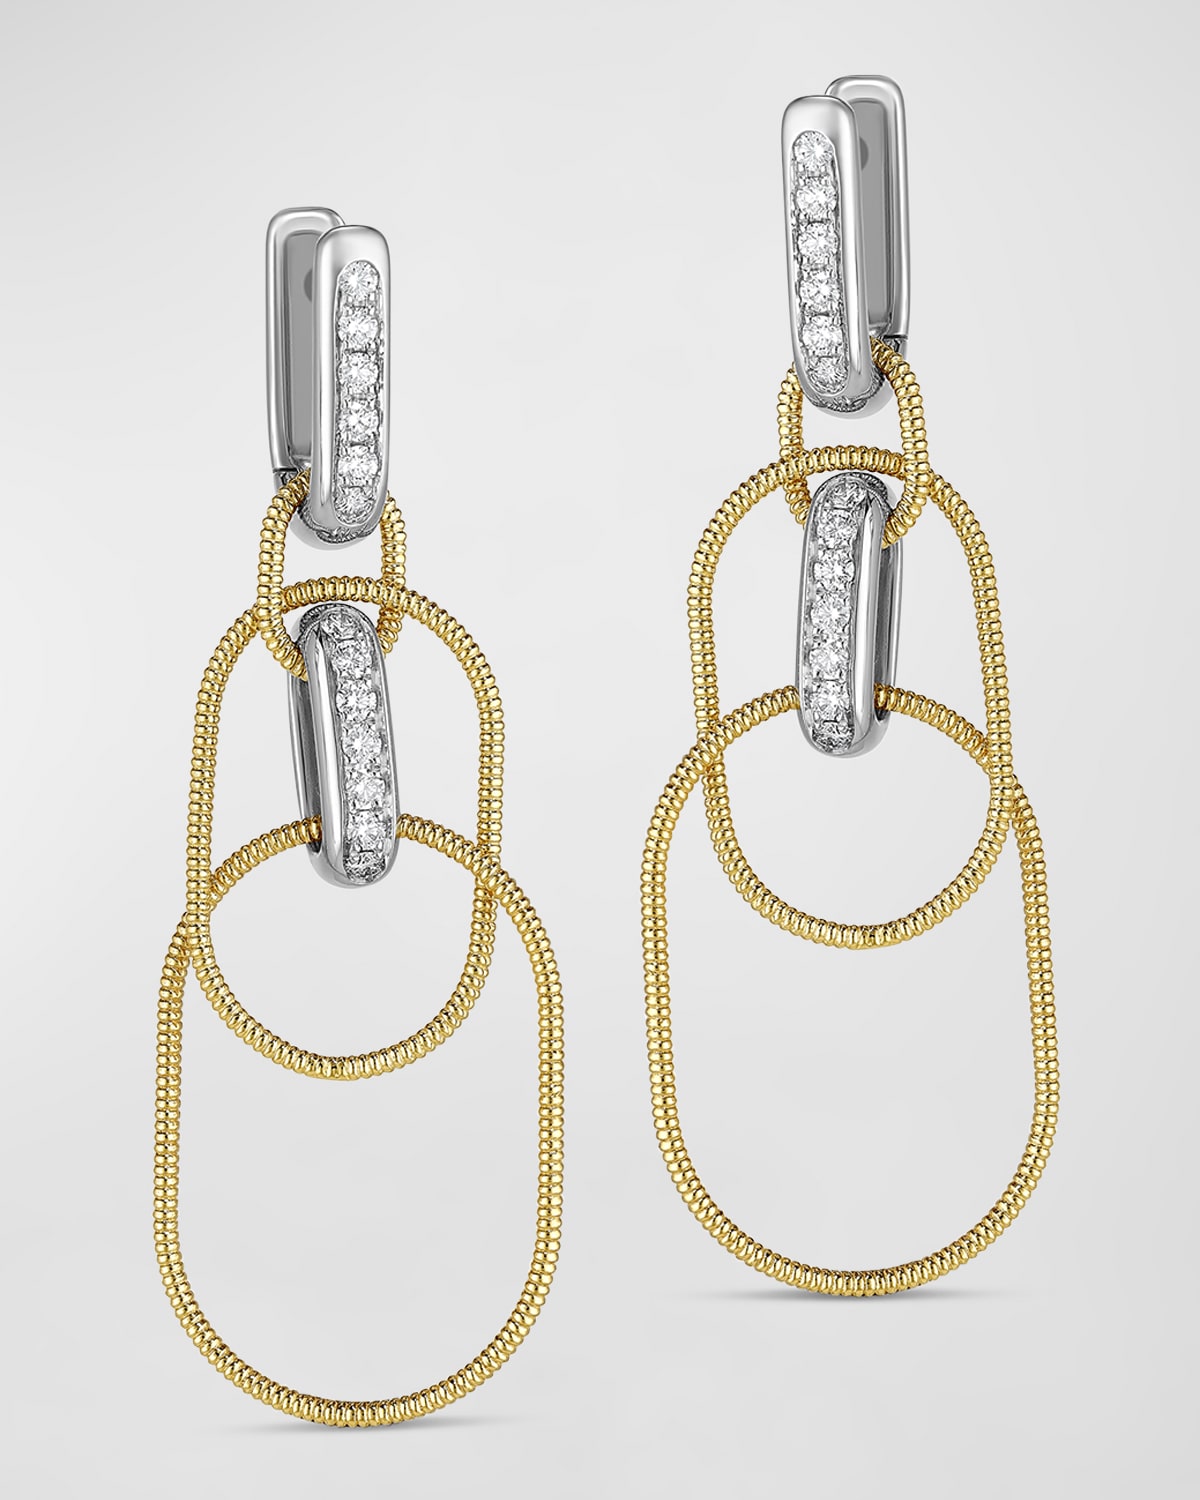 Sabbia D'Oro 18K Yellow Gold and White Gold Diamond Earrings